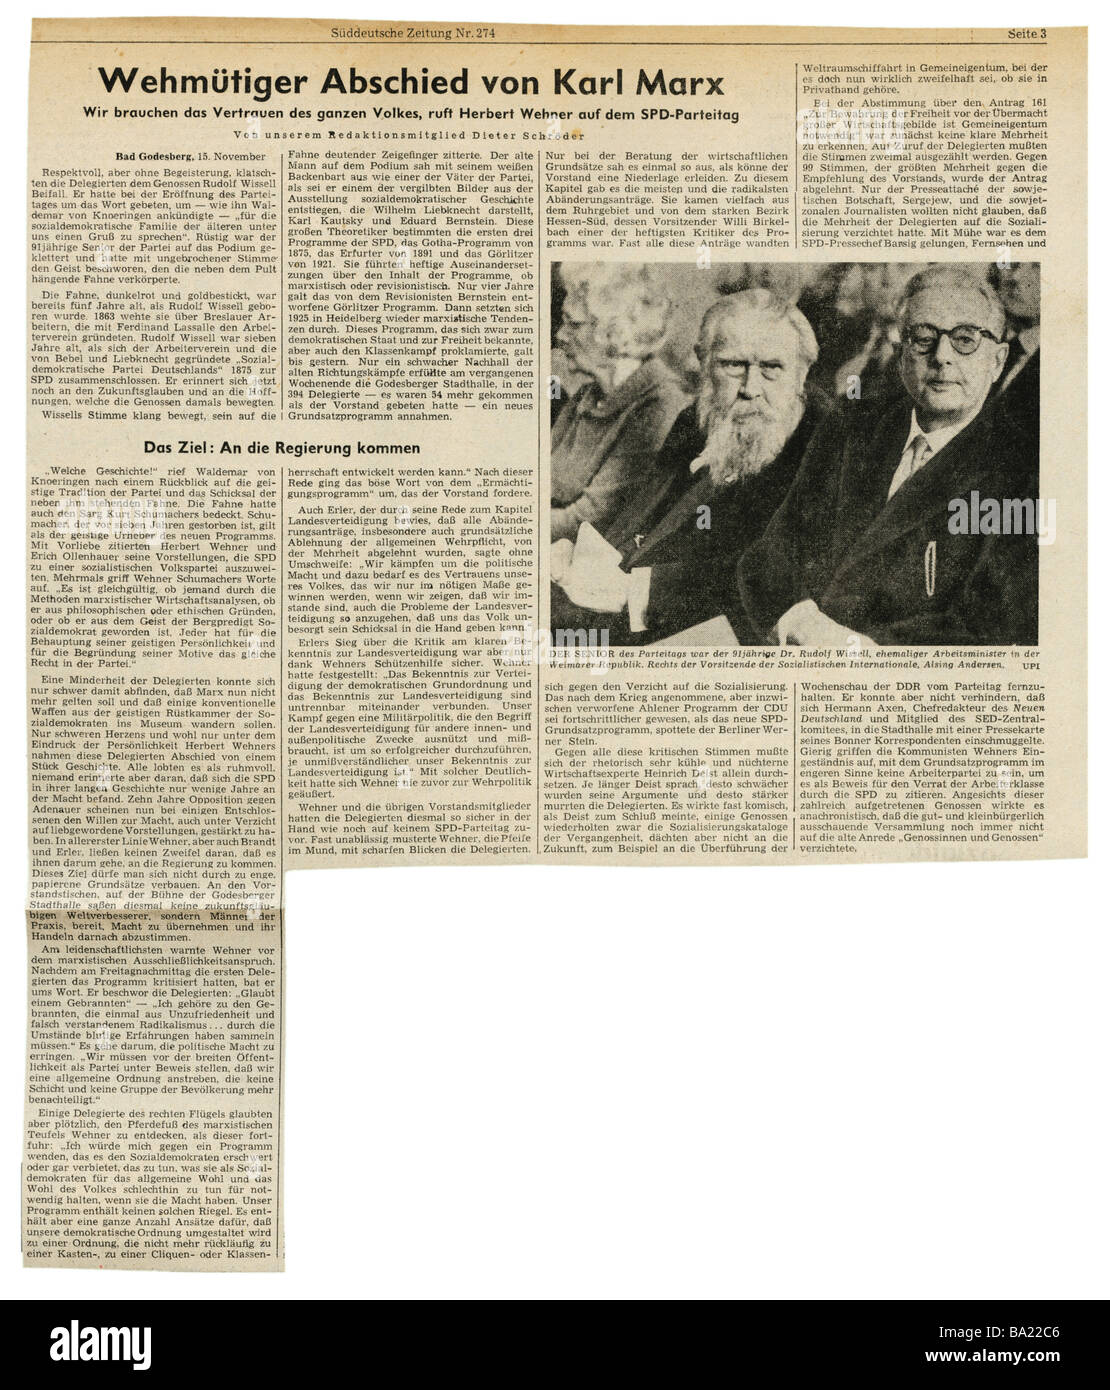 press/media, magazines, 'Süddeutsche Zeitung', Munich, 15 volume, number 274, Monday 16.11.1959, article, SPD party rally abandoning Marxism, Stock Photo